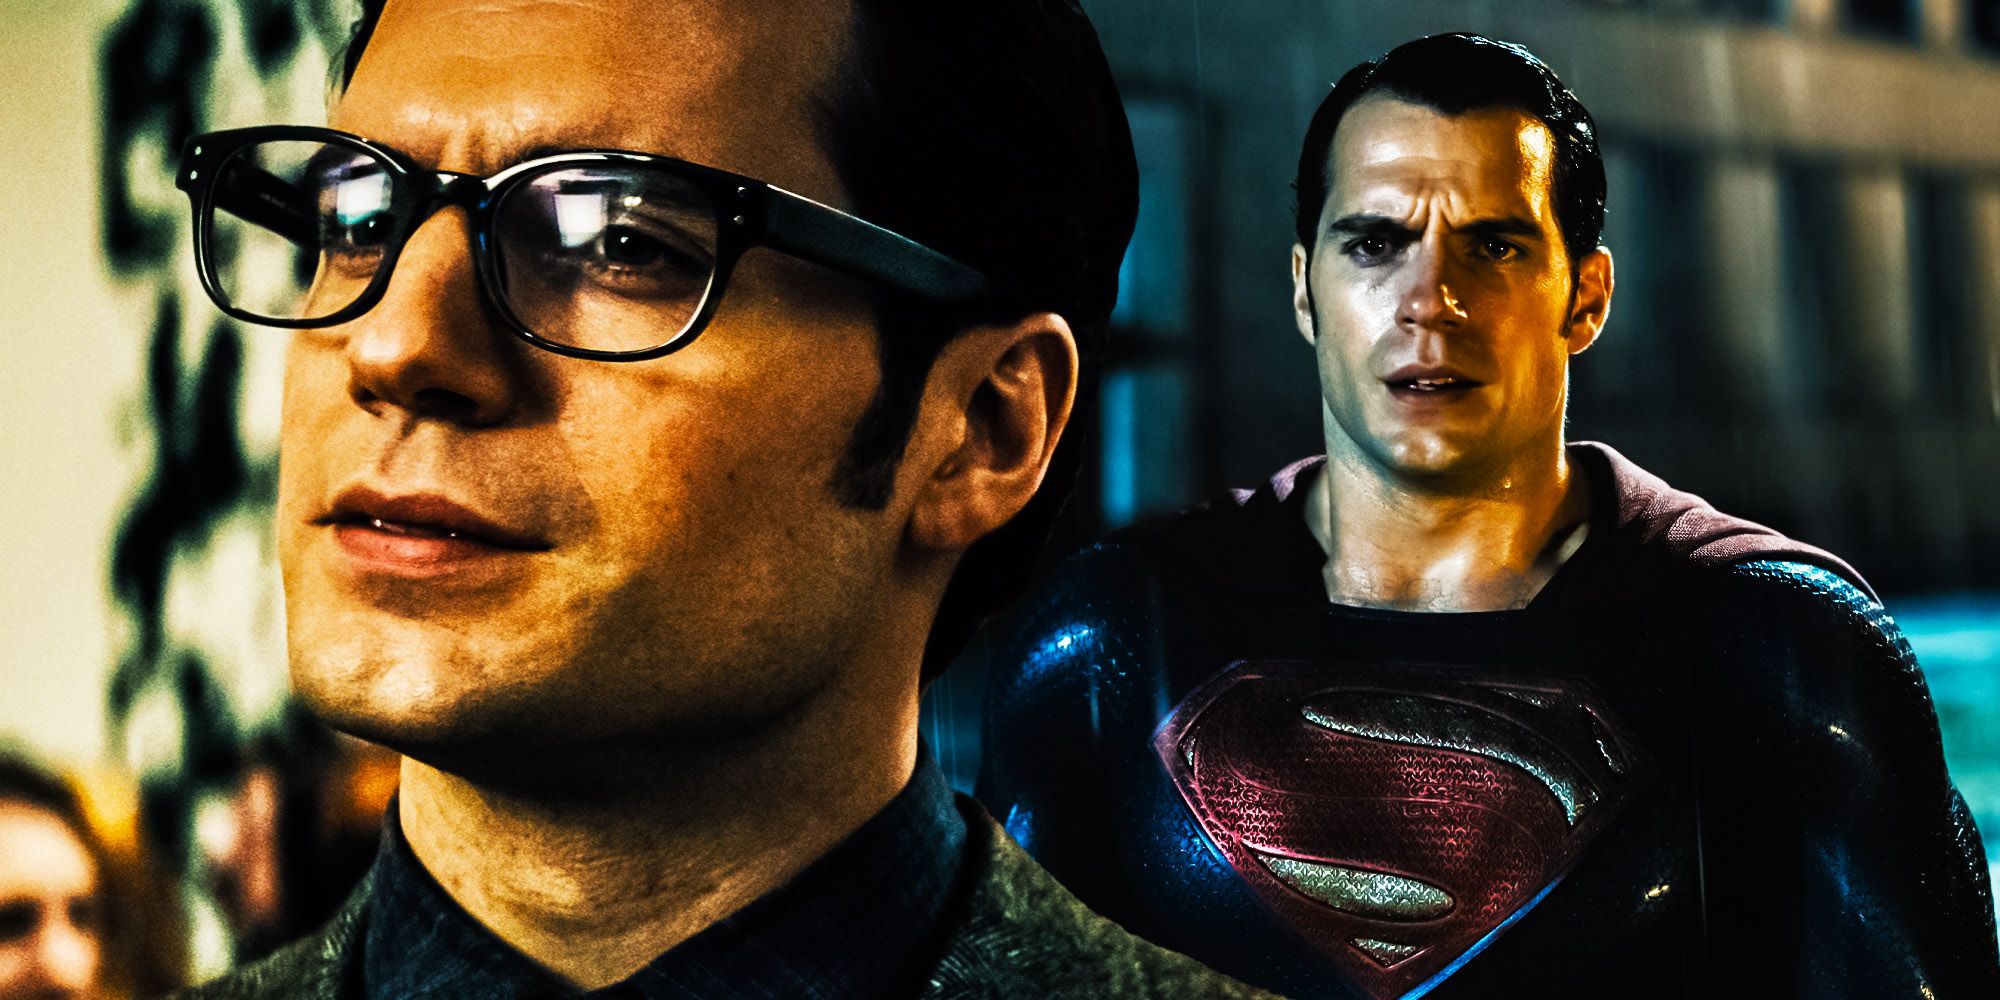 Henry Cavill as Clark Kent and Superman